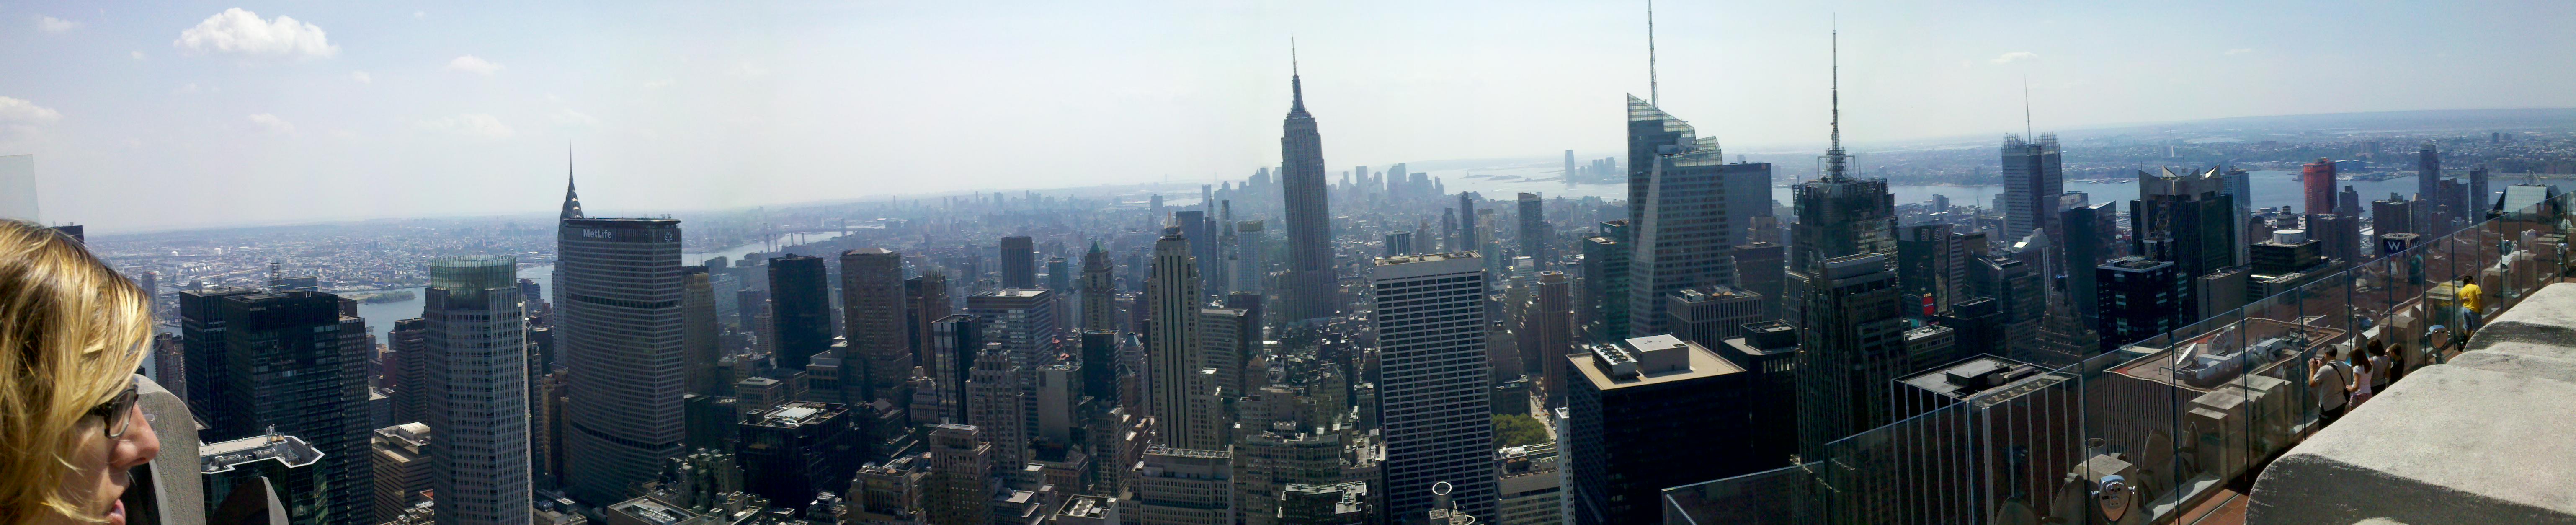 newyork city panoramic